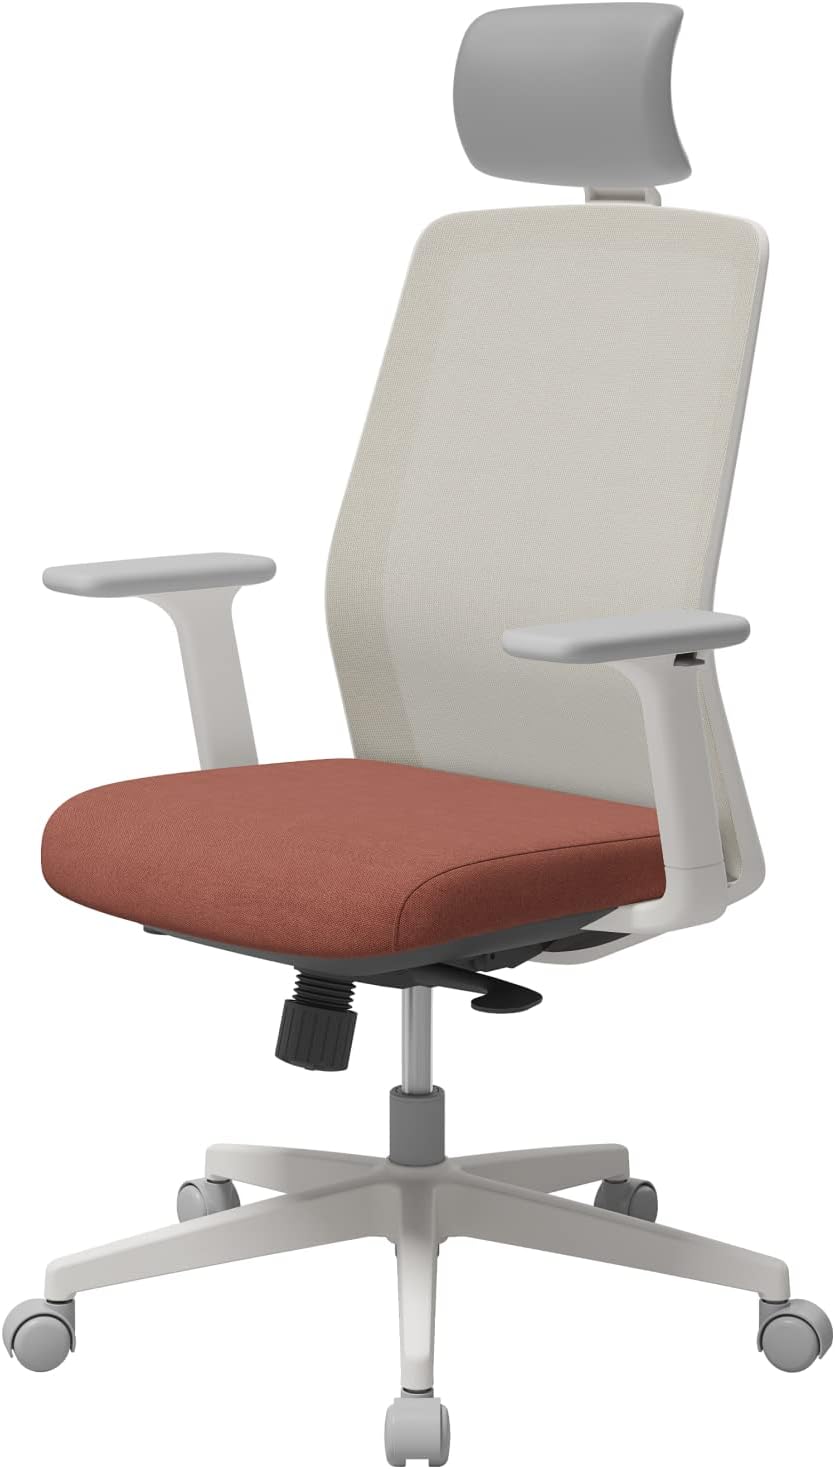 SIDIZ T40 SE Ergonomic Office Chair : Comfortable Home Office Chair with Reclining Tilt Lock, Headrest, 3D Armrests, Mesh Back Computer Desk Chair, Alternative Gaming Chair (Terracotta)